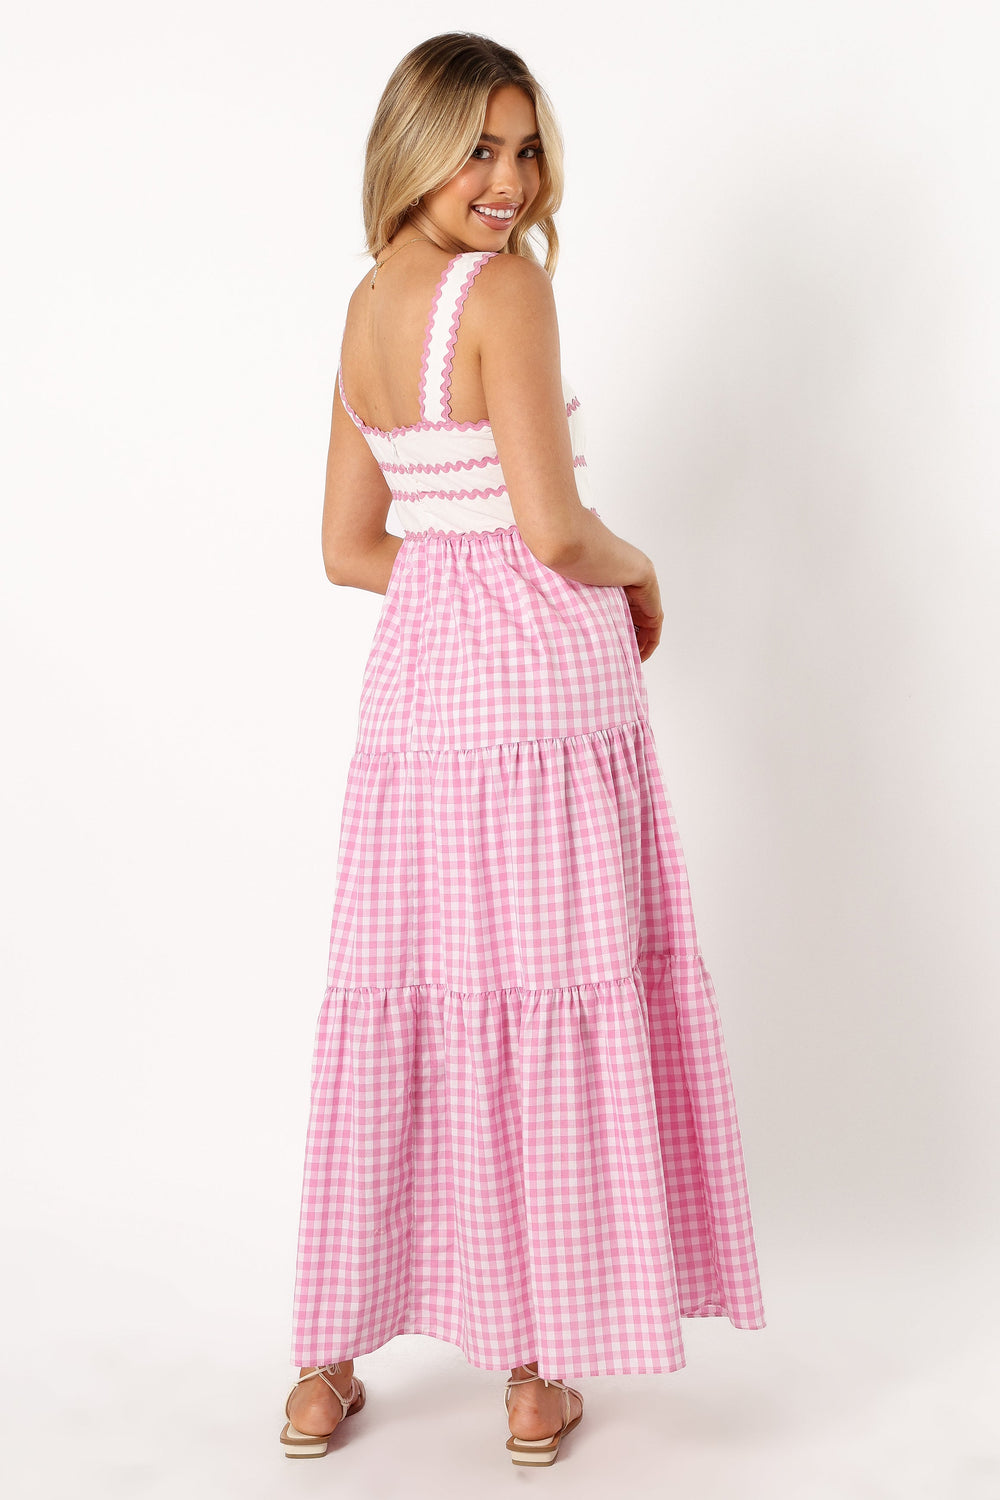 DRESSES @Rebecca Contrast Midi Dress - Pink Gingham